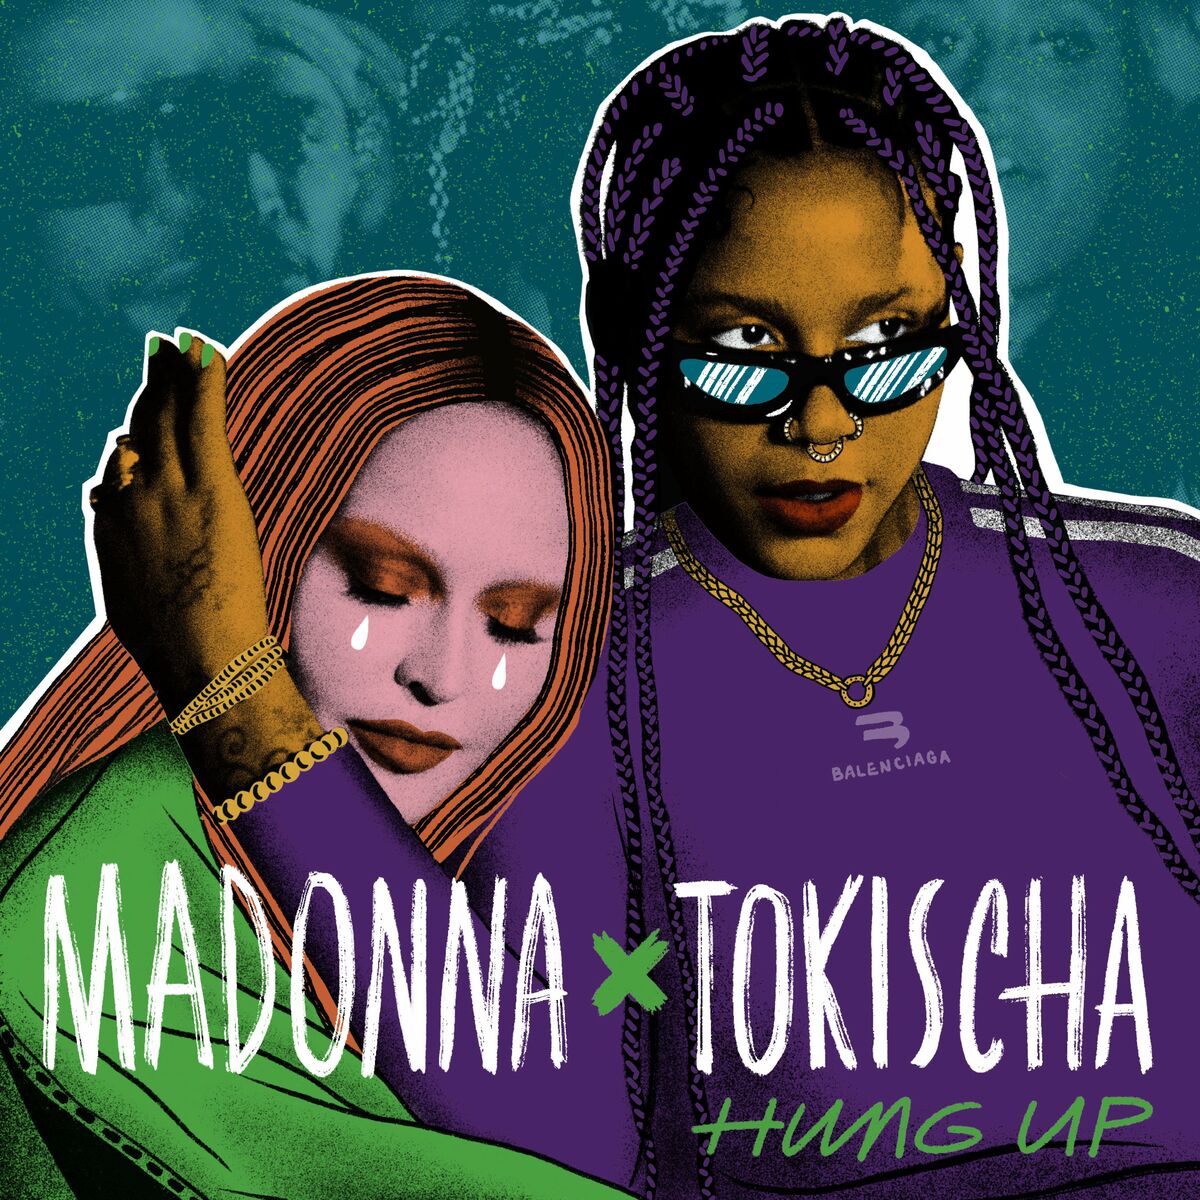 Madonna Feat. Tokischa - Hung Up On Tokischa.mp3